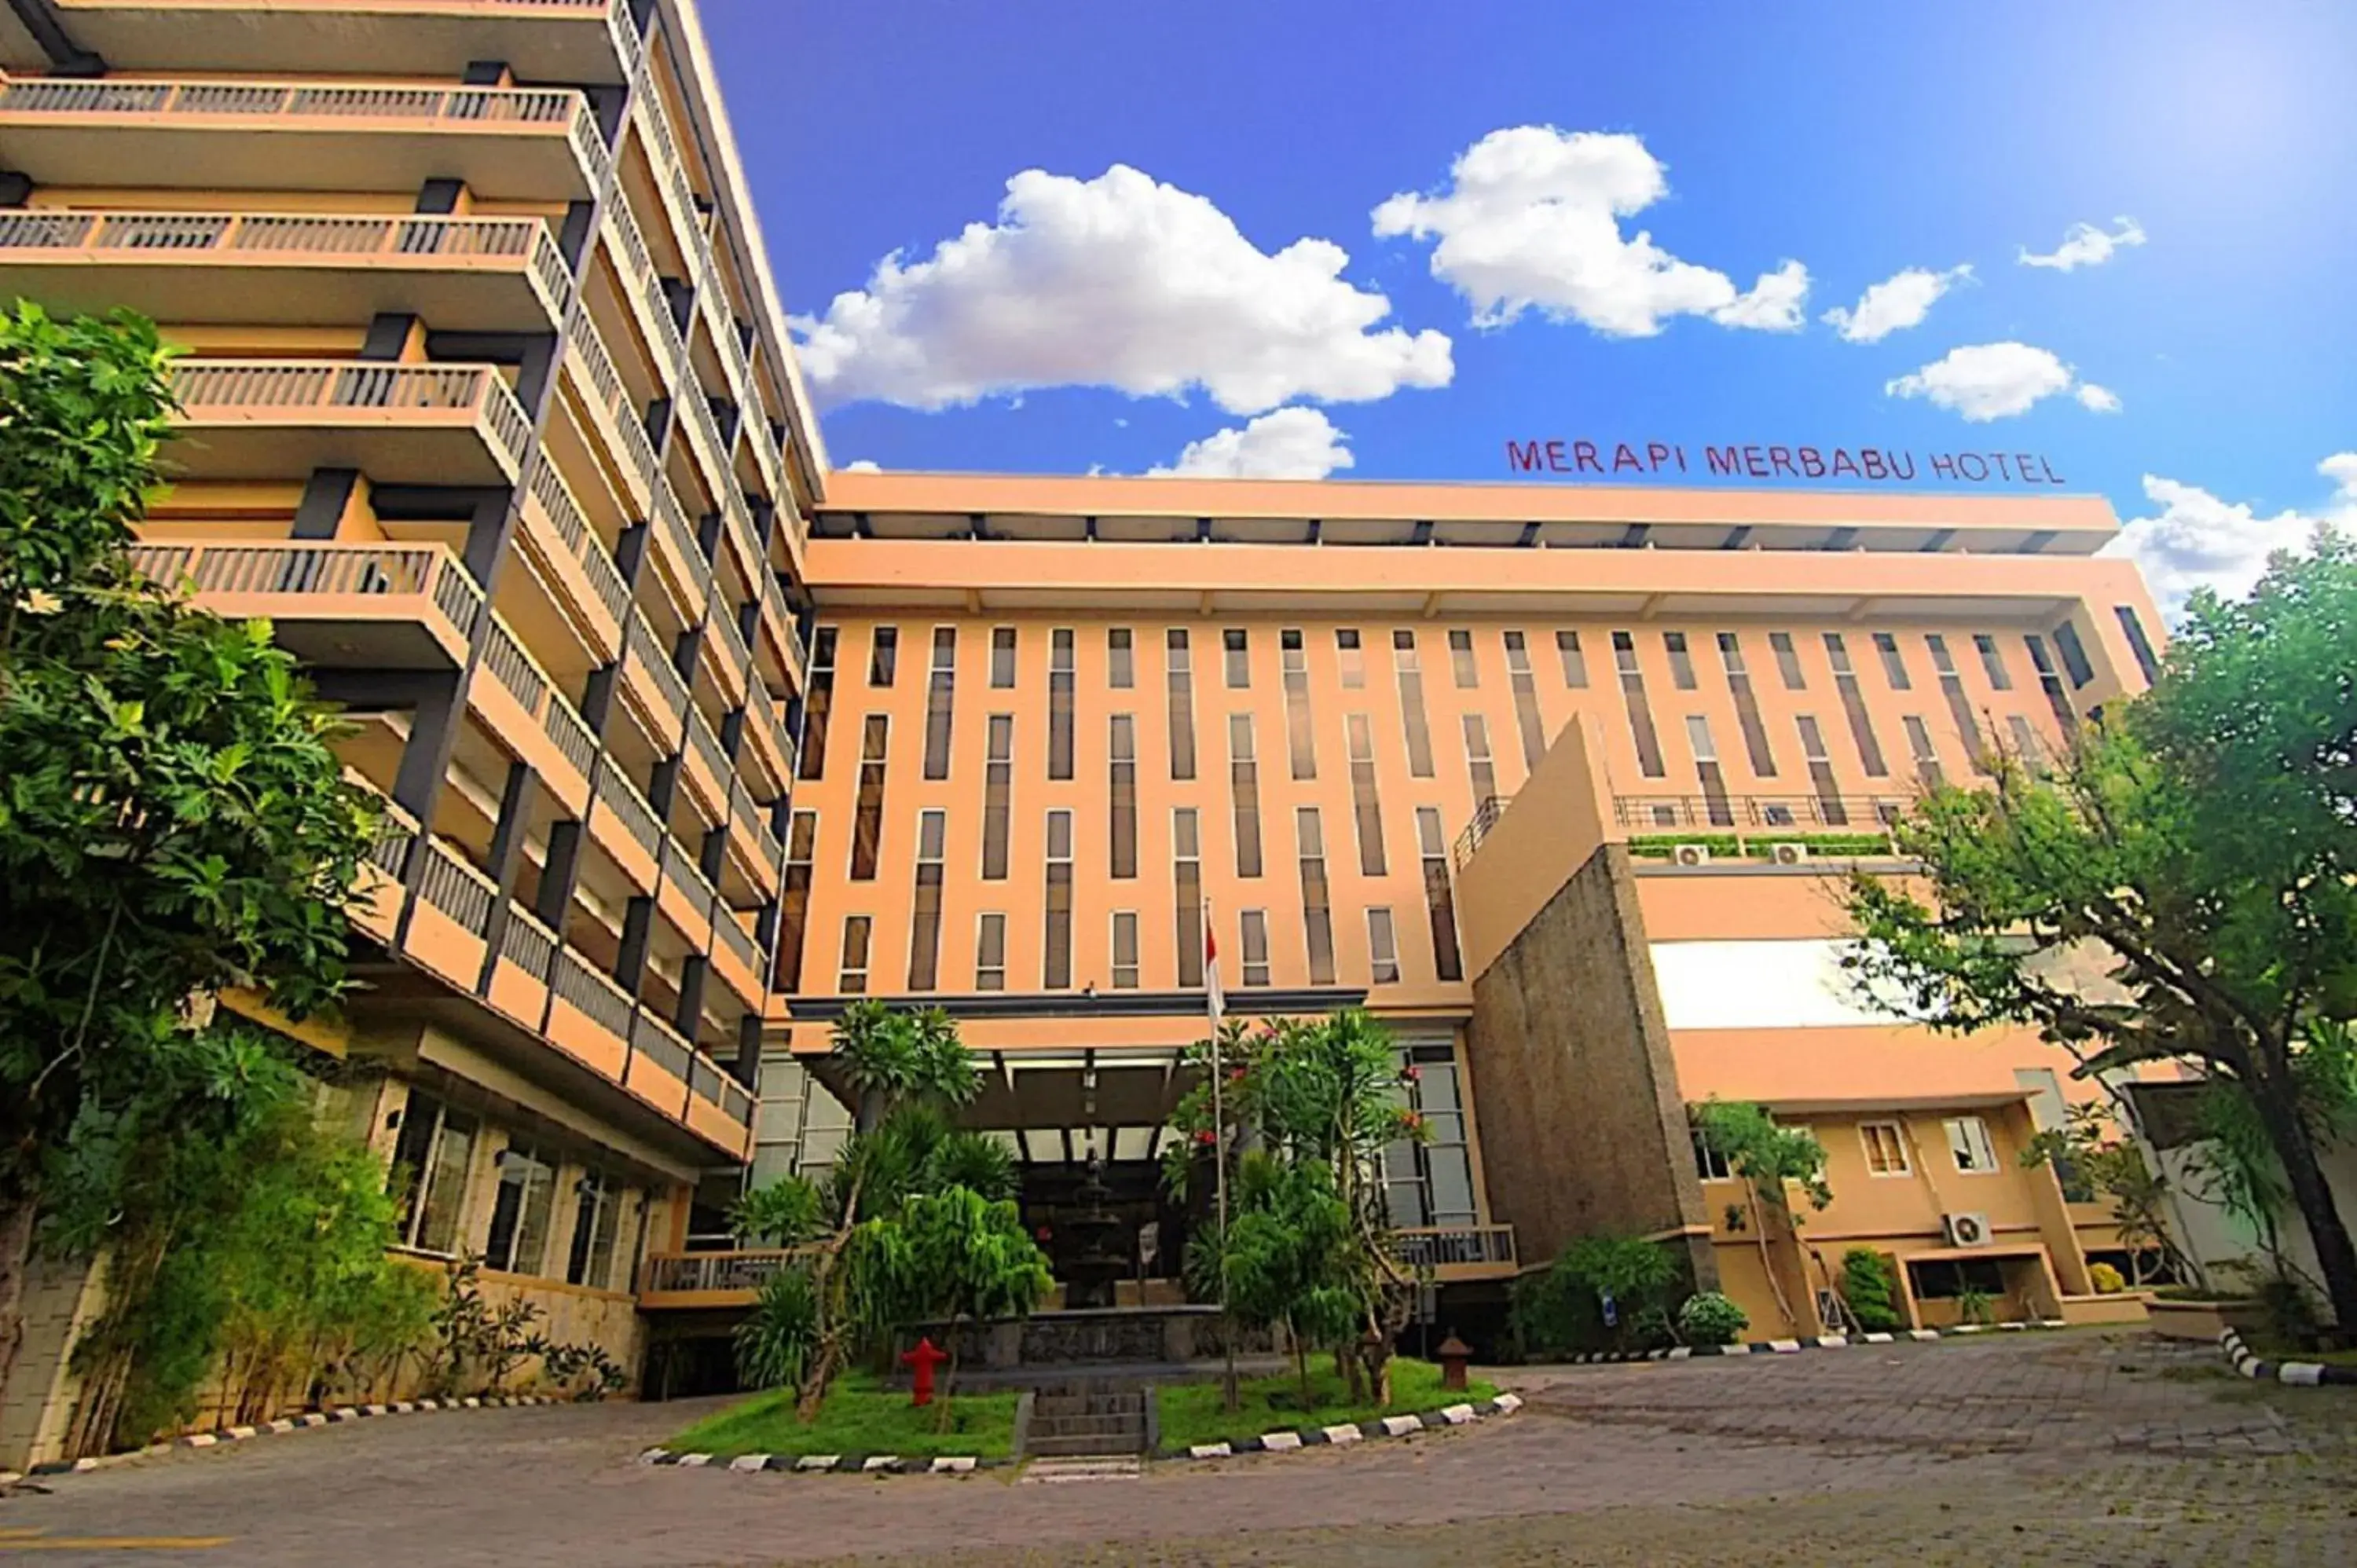 Property building in Merapi Merbabu Hotels